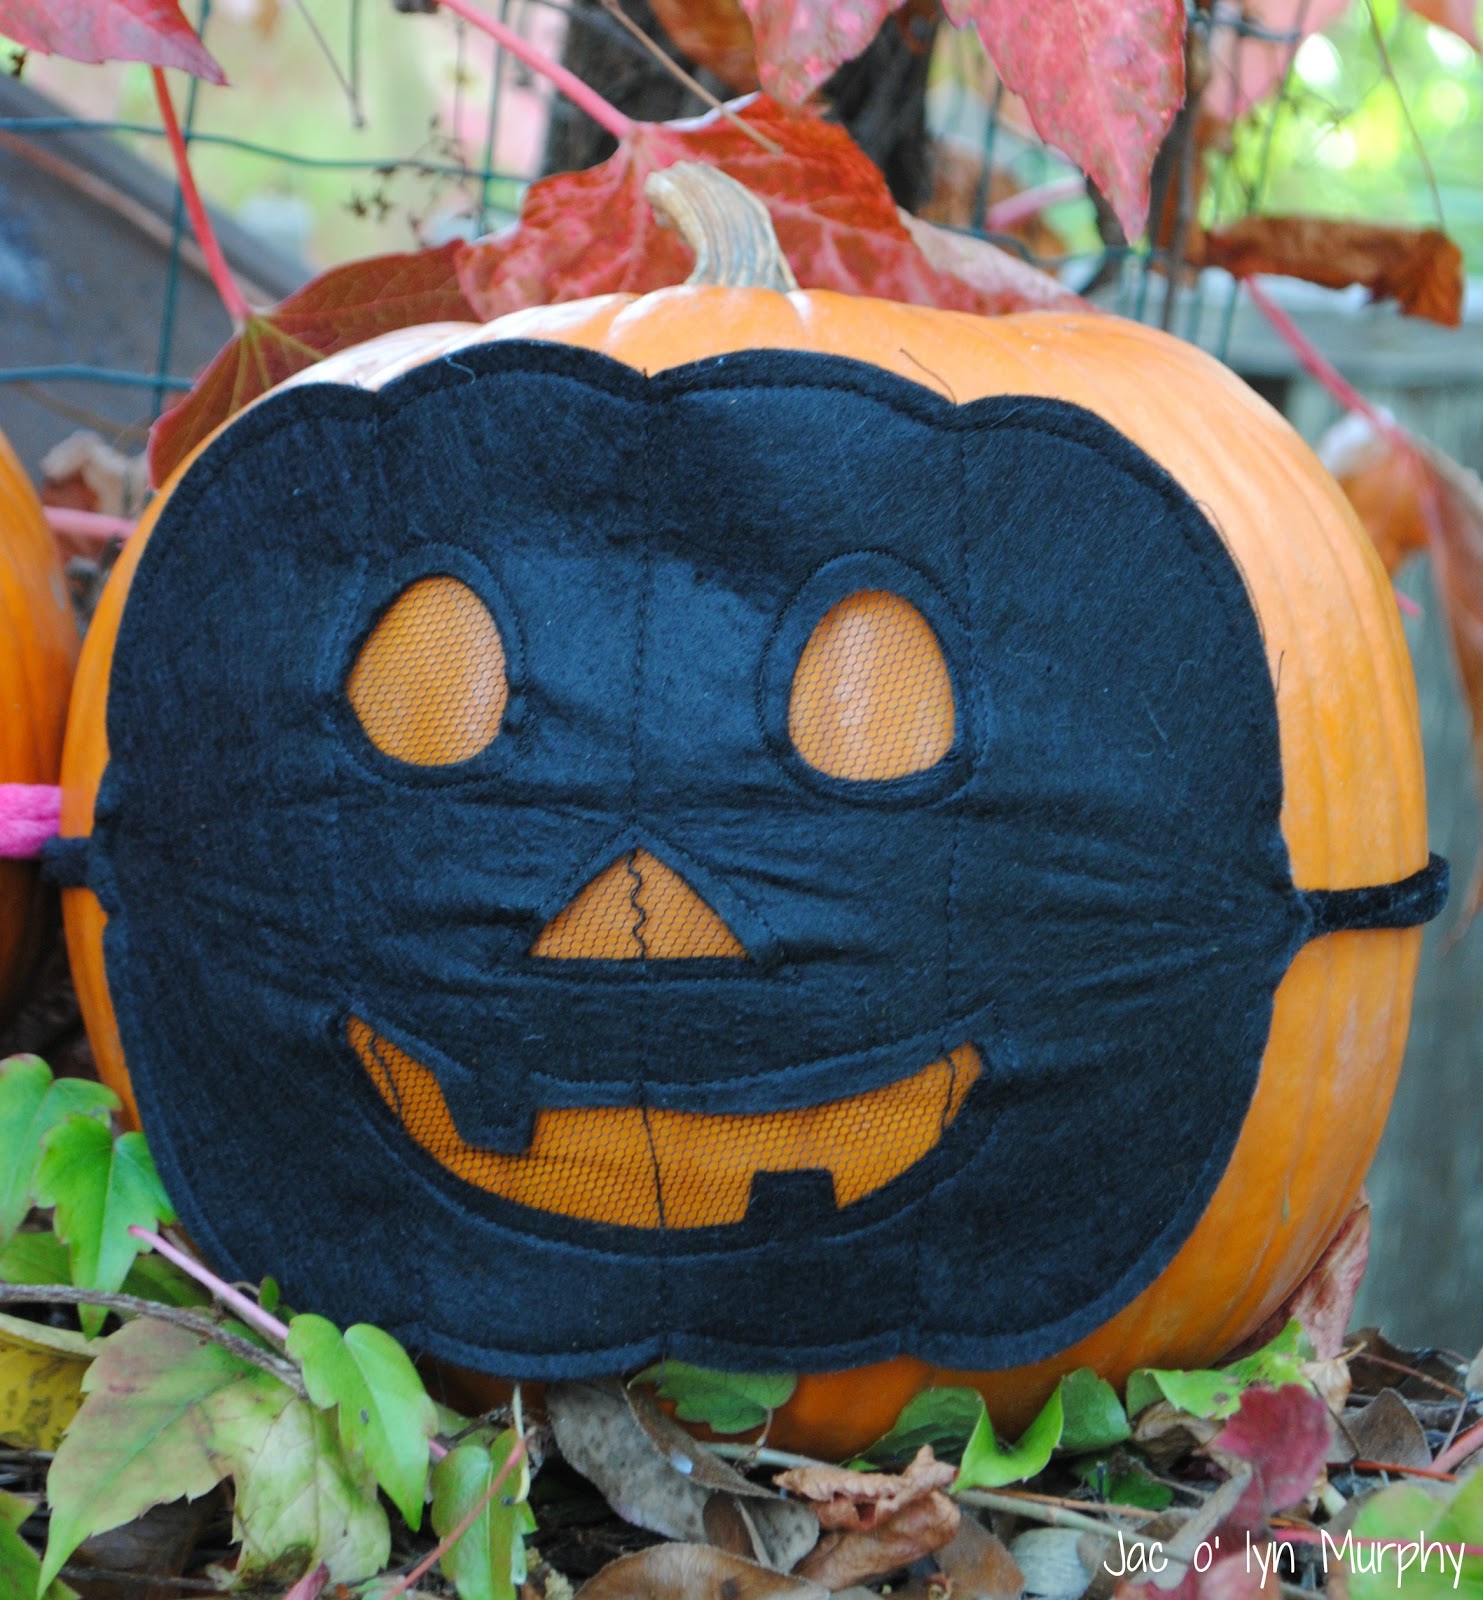 Jac o' lyn Murphy: Masked Pumpkins